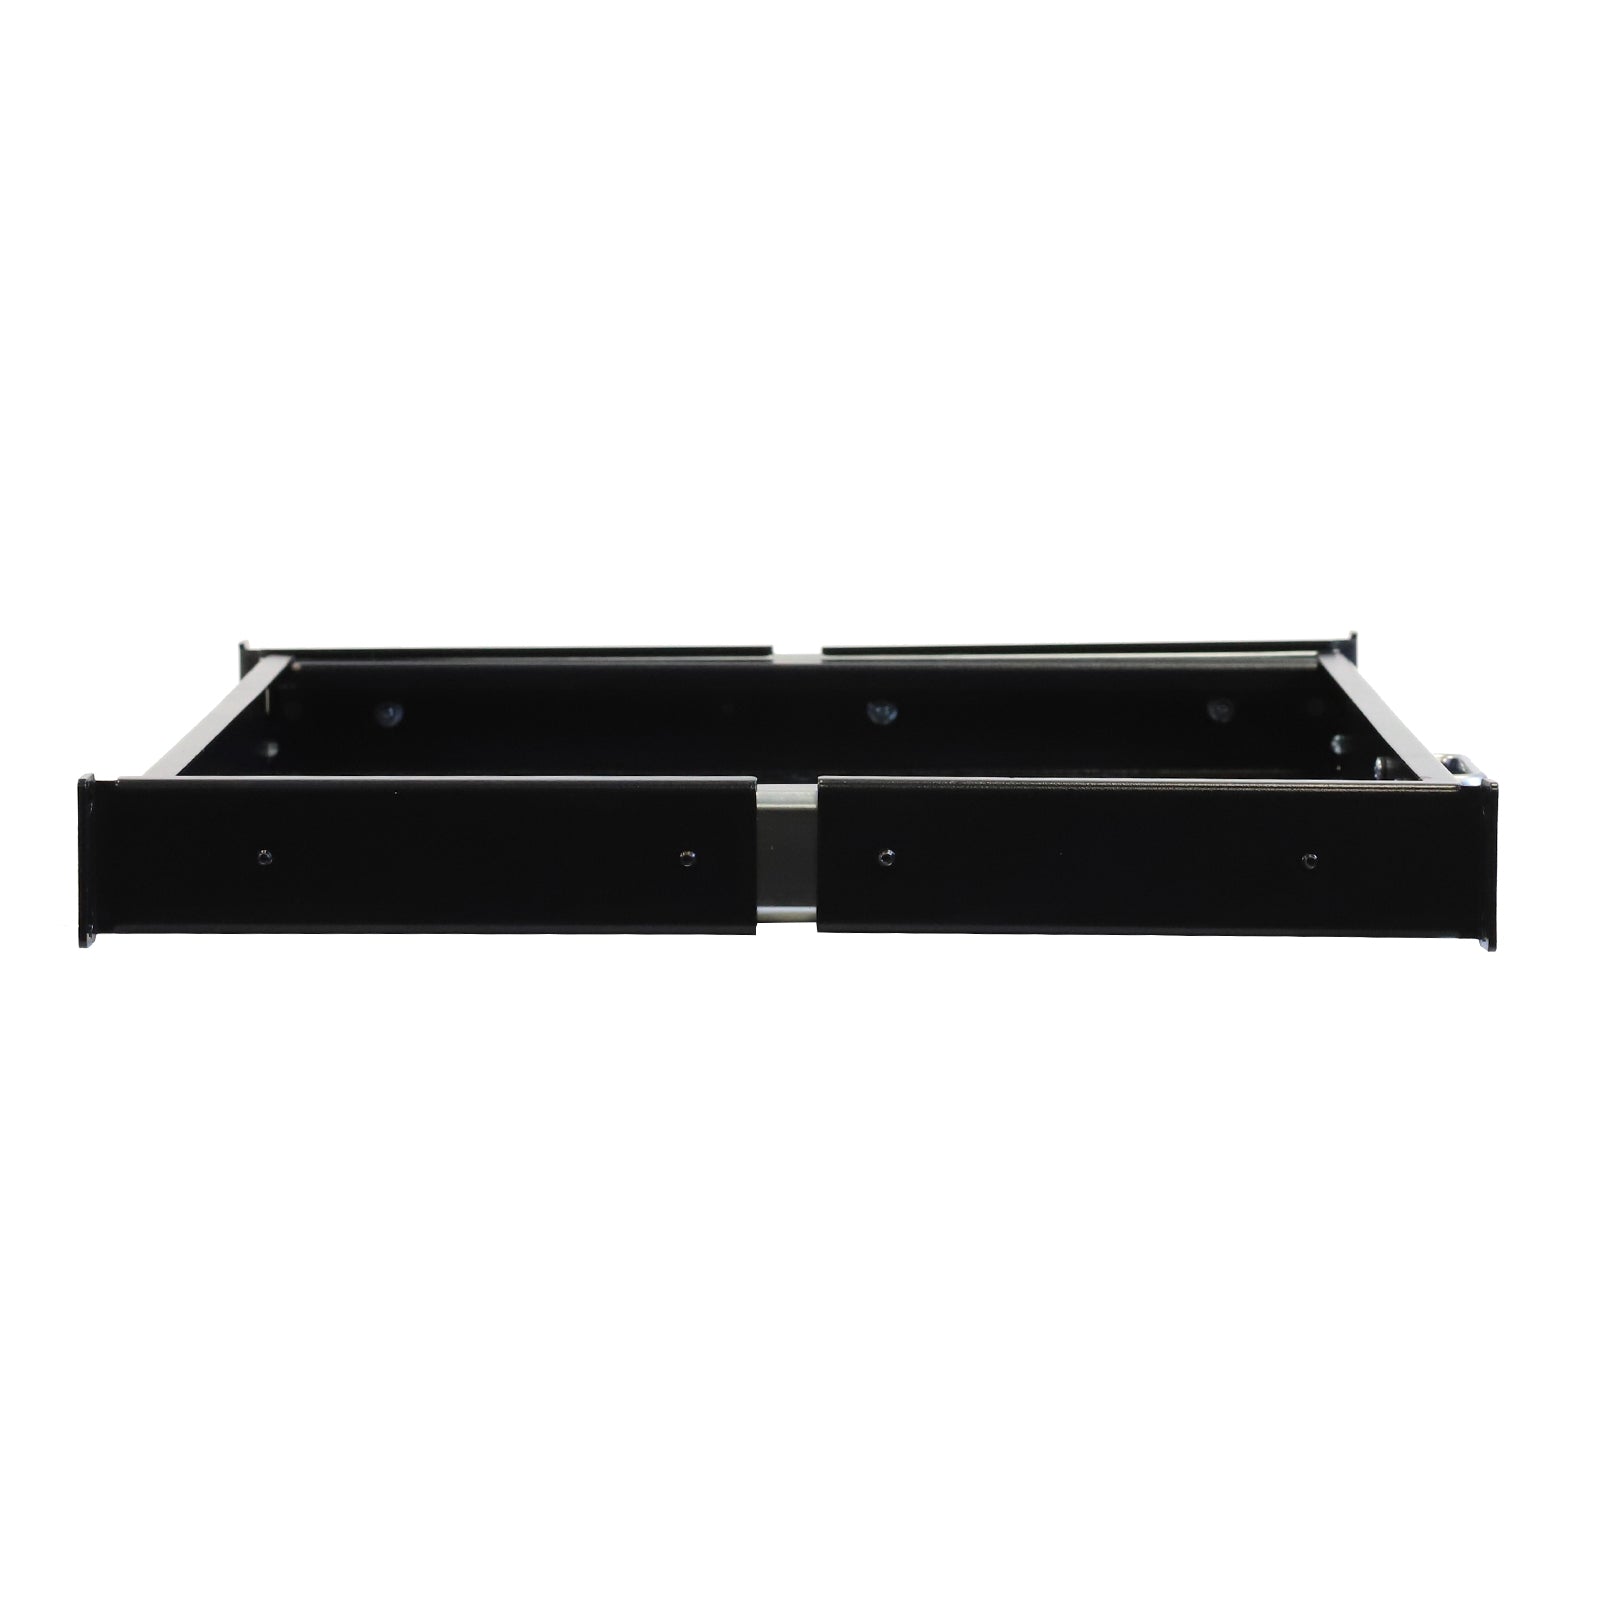 Aeons Premium 1U Rack Mount Vented 4-Post Sliding Shelf, 14-inch Depth, 2-Pack